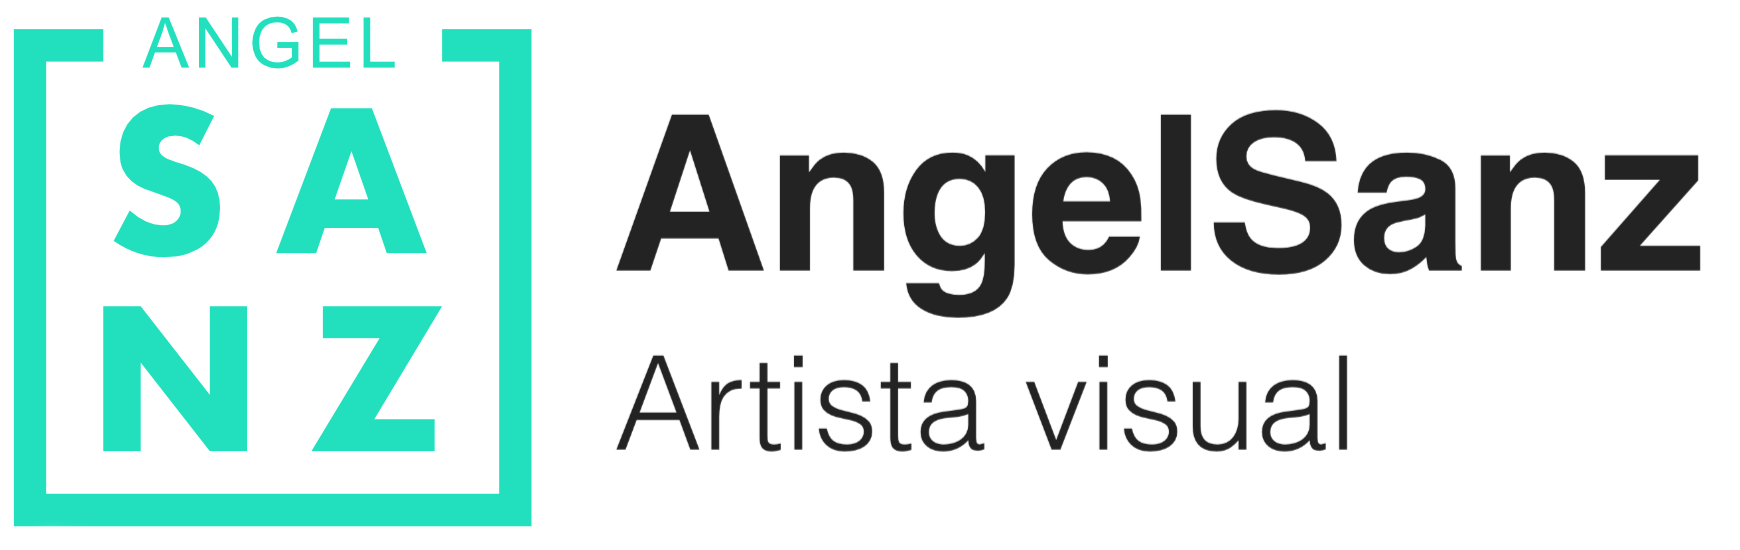 Angel Sanz